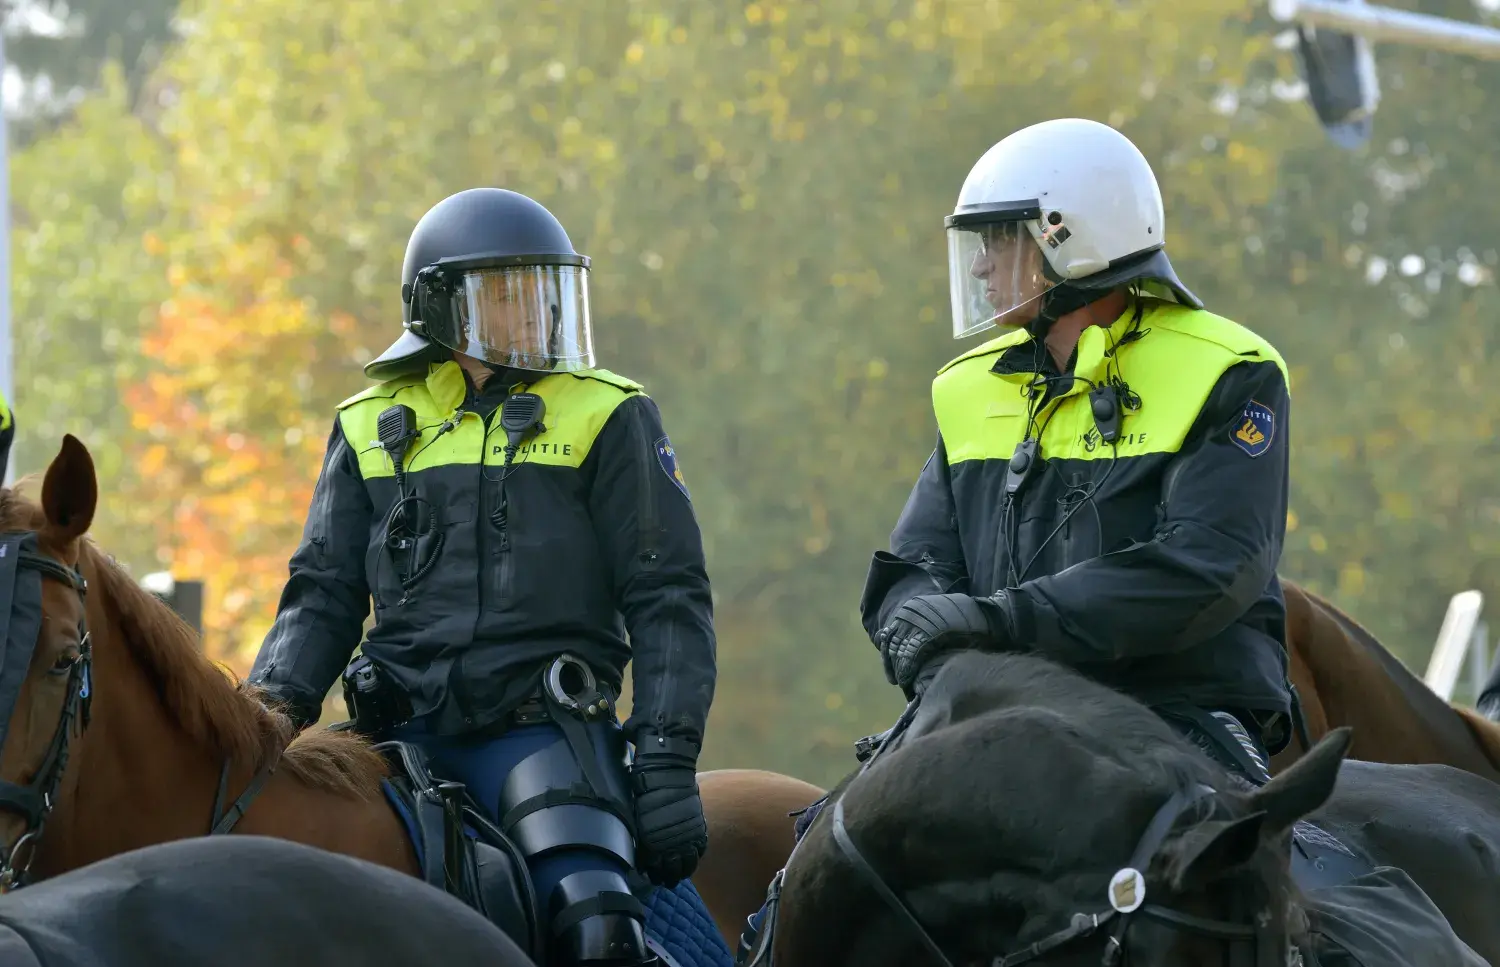 ww-lco2-police on horse.jpg